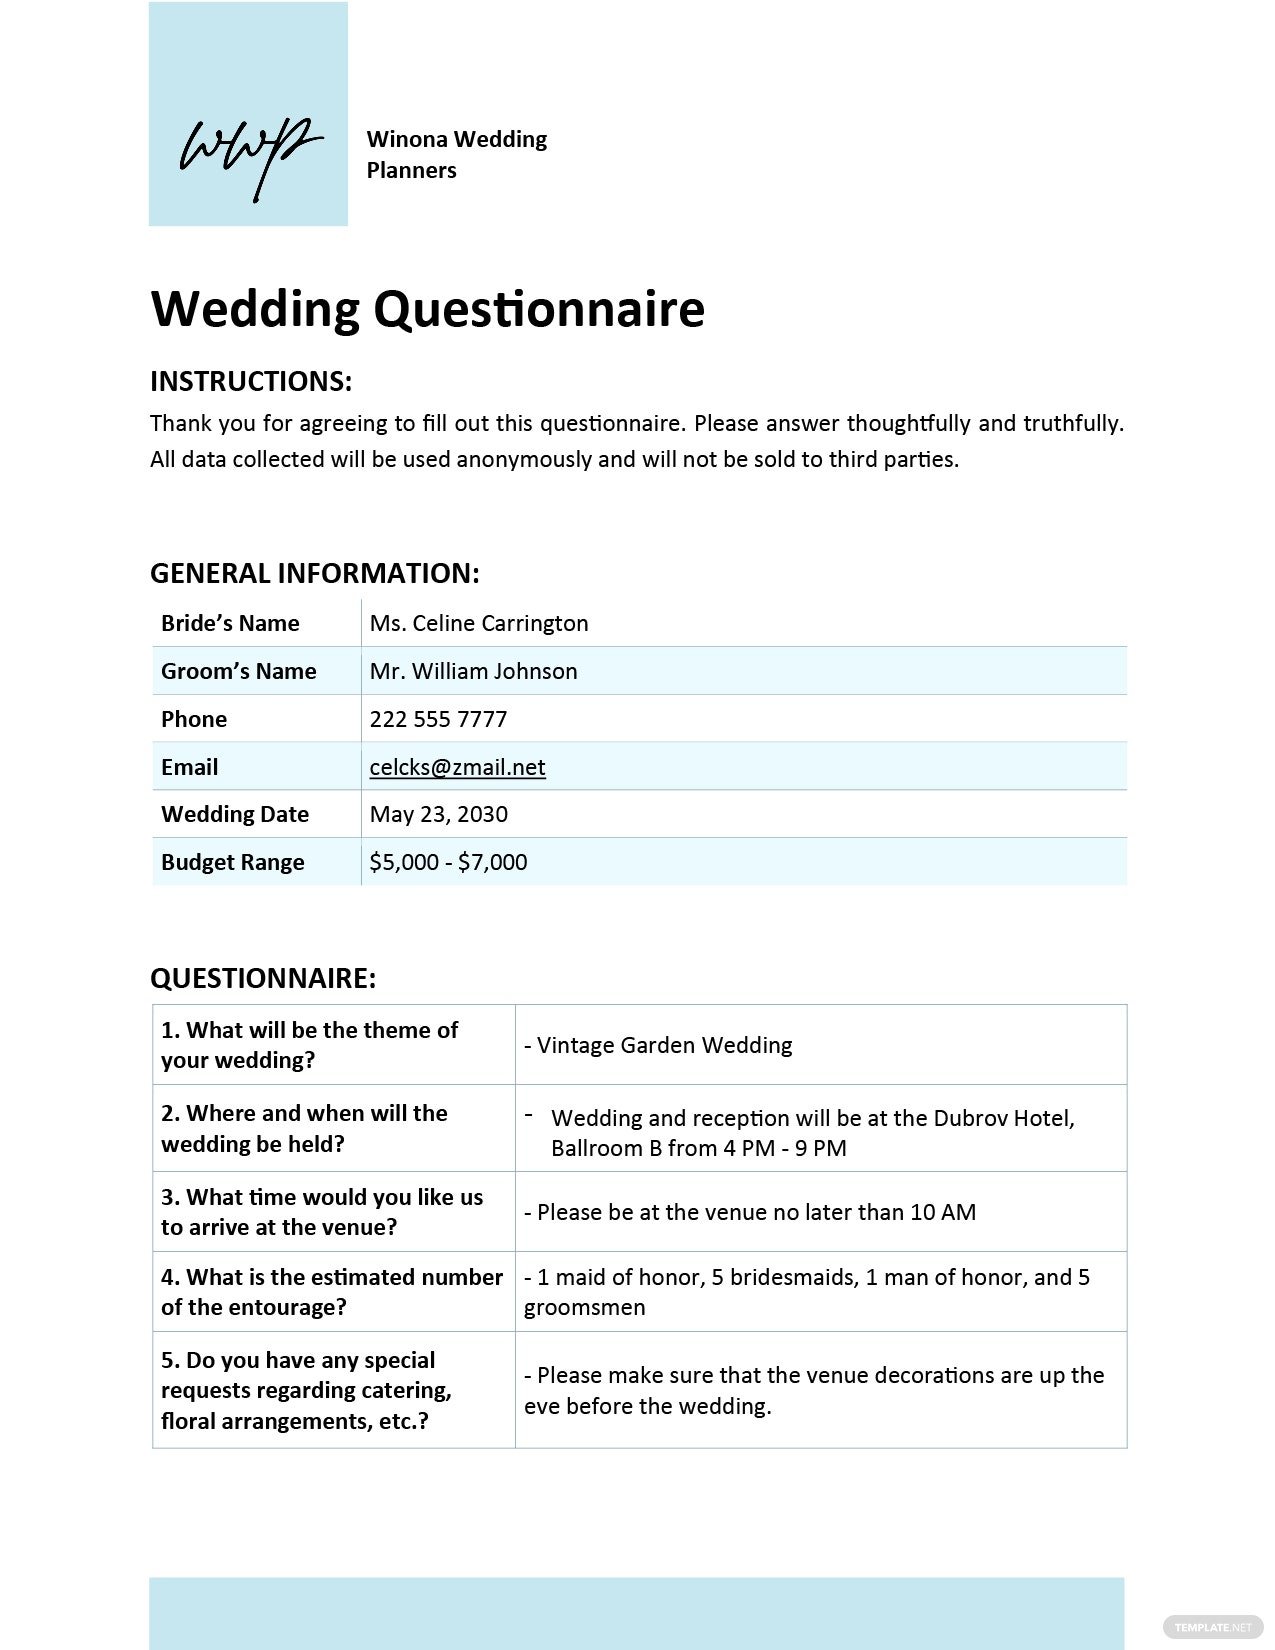 wedding-questionnaire